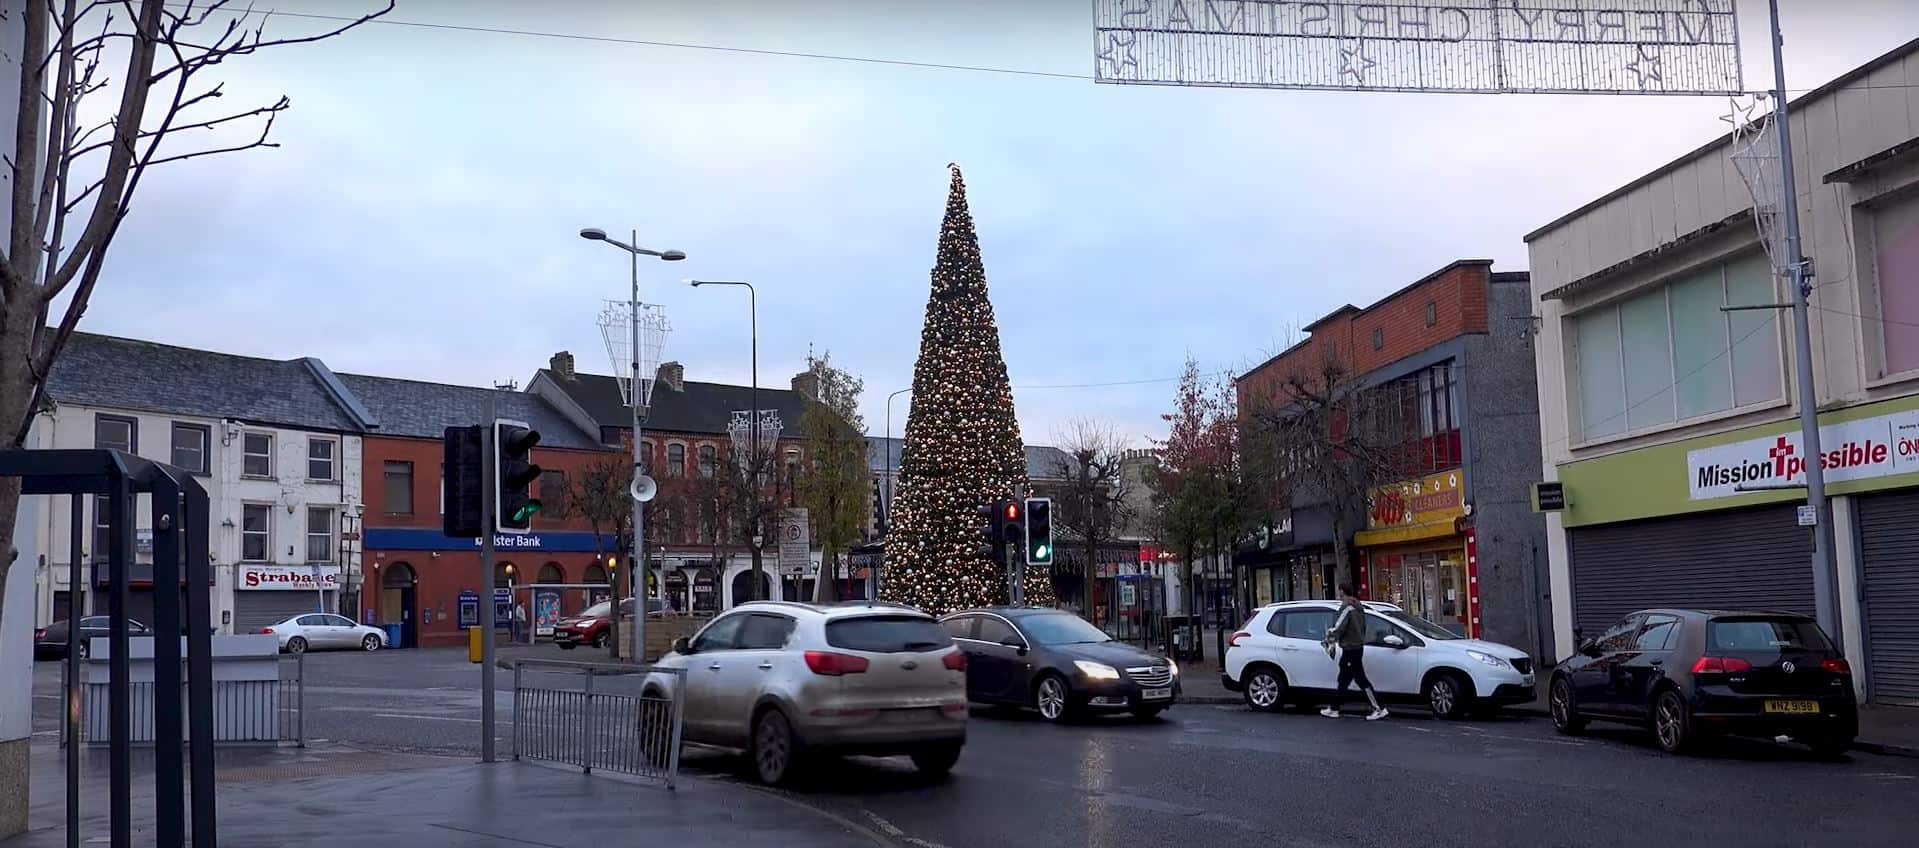 Strabane At Christmas, Northern Ireland